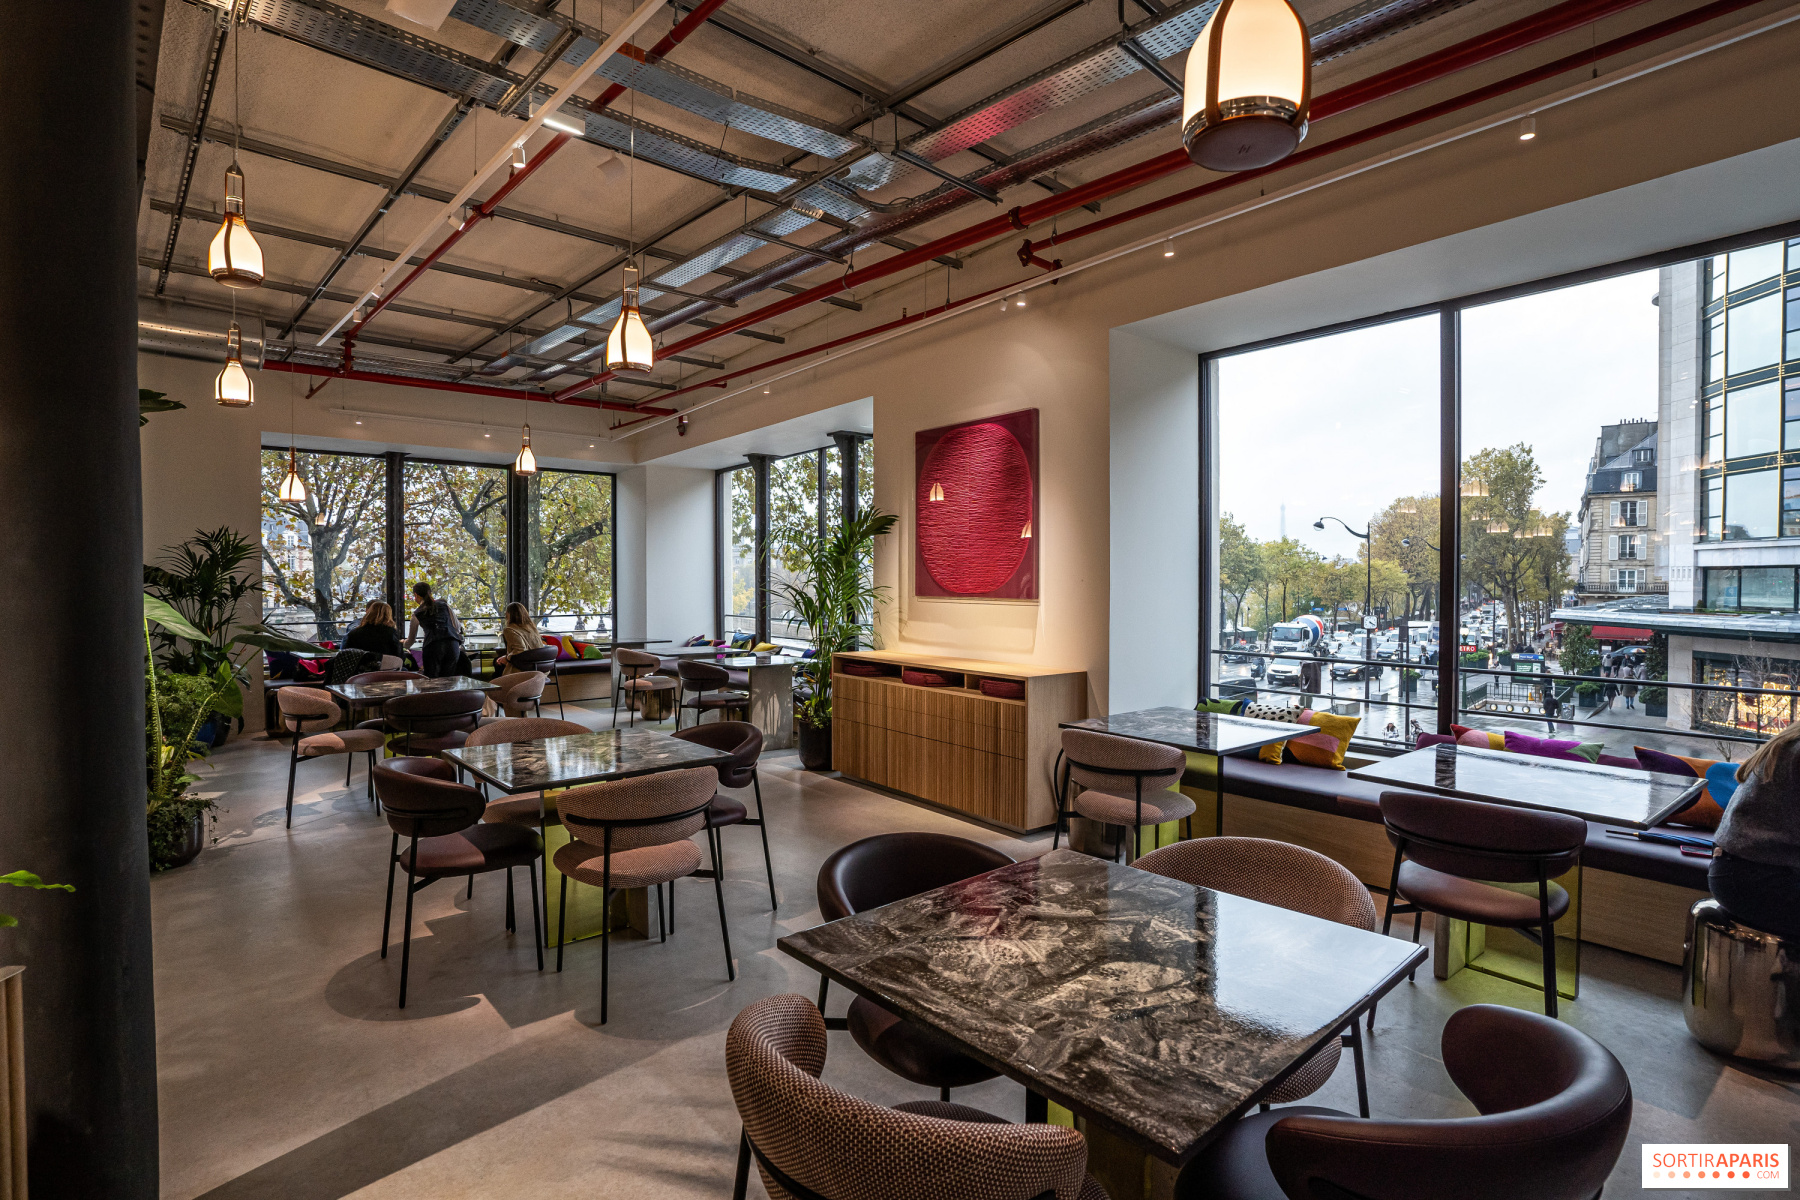 LV Dream, das neue Café und Chocolaterie von Maxime Frédéric at